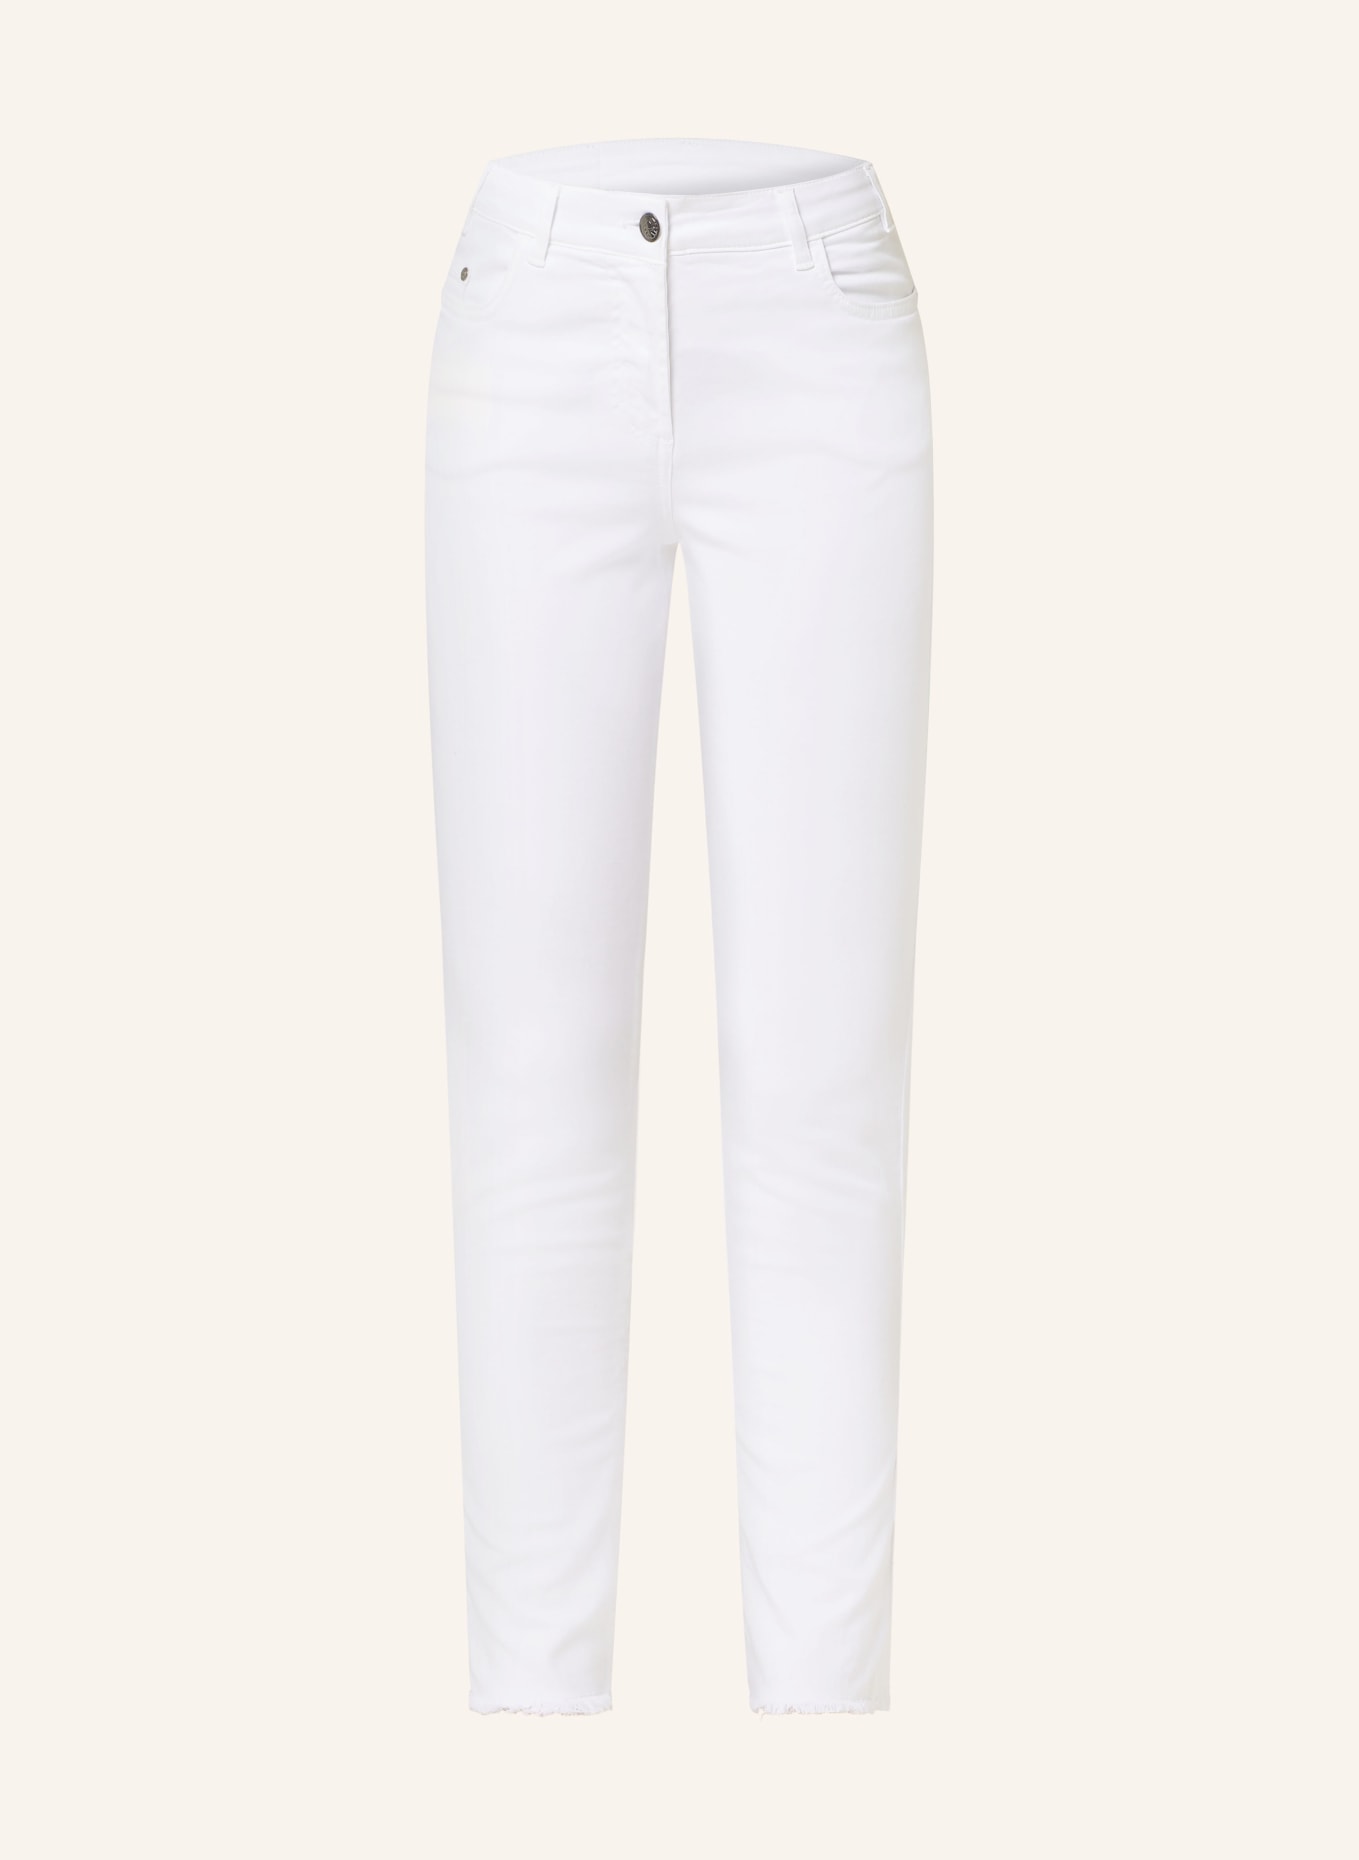 SPORTALM Skinny Jeans, Farbe: 01 bright white (Bild 1)